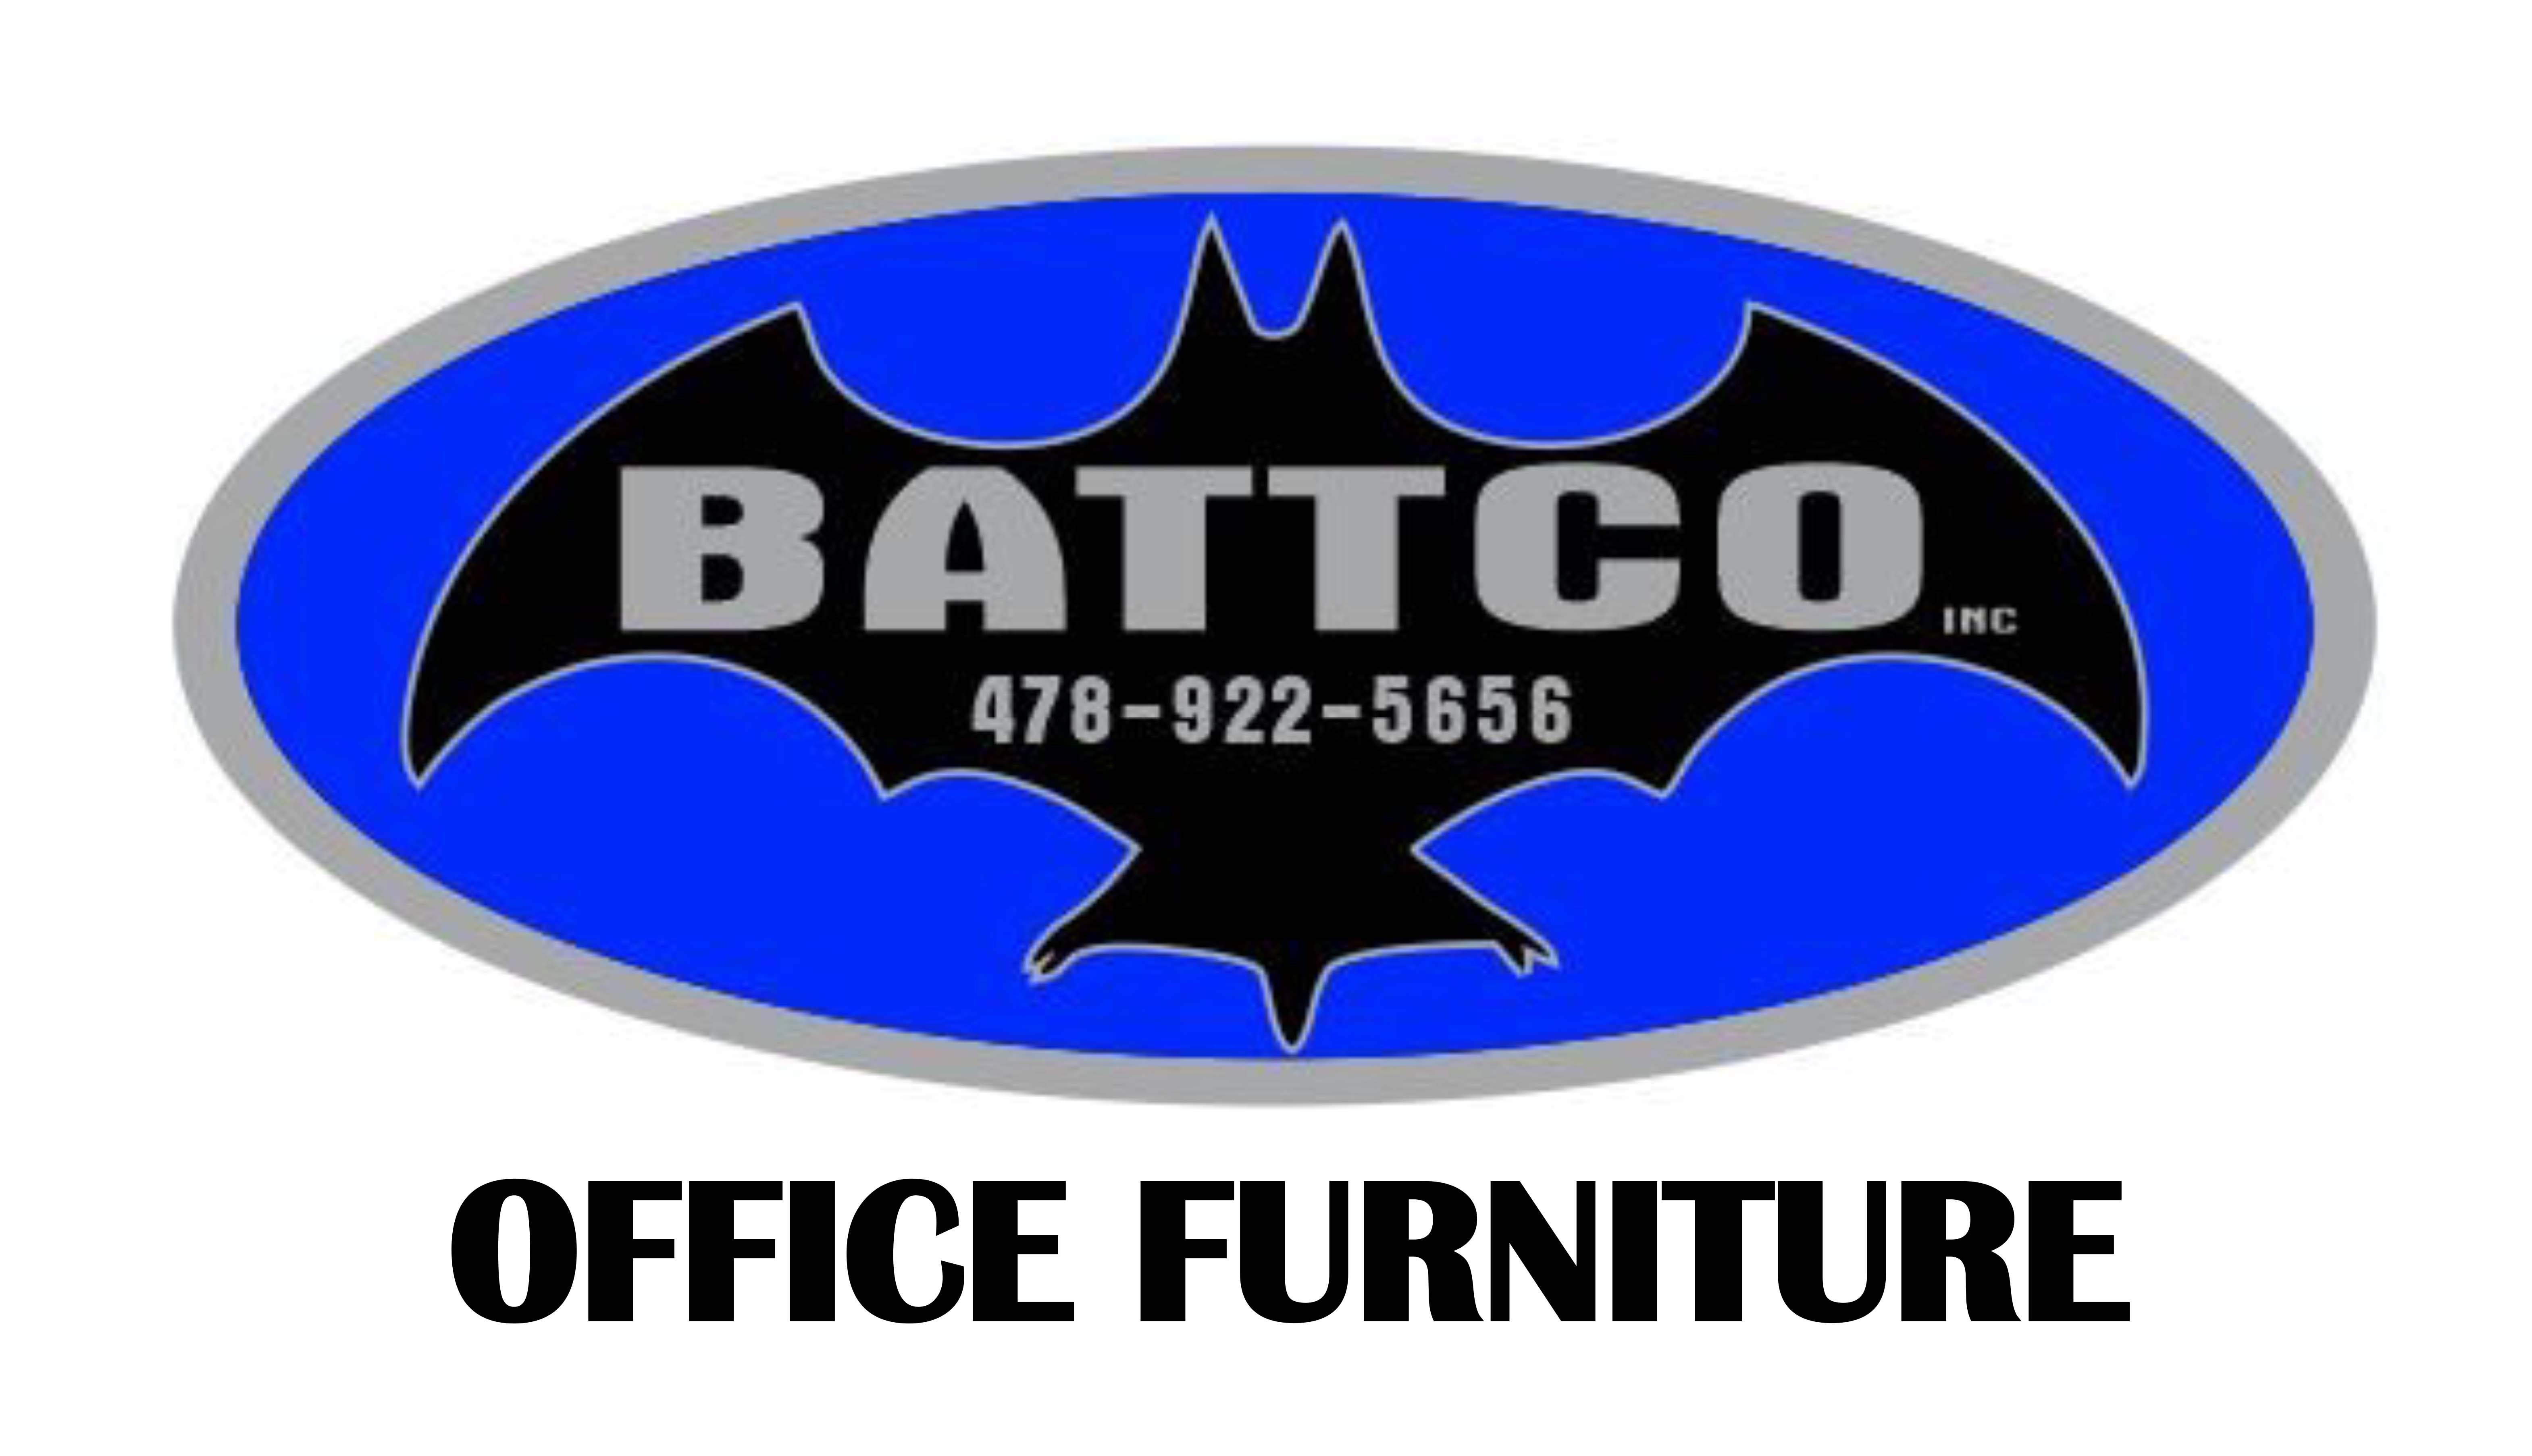 Battco Office Furniture